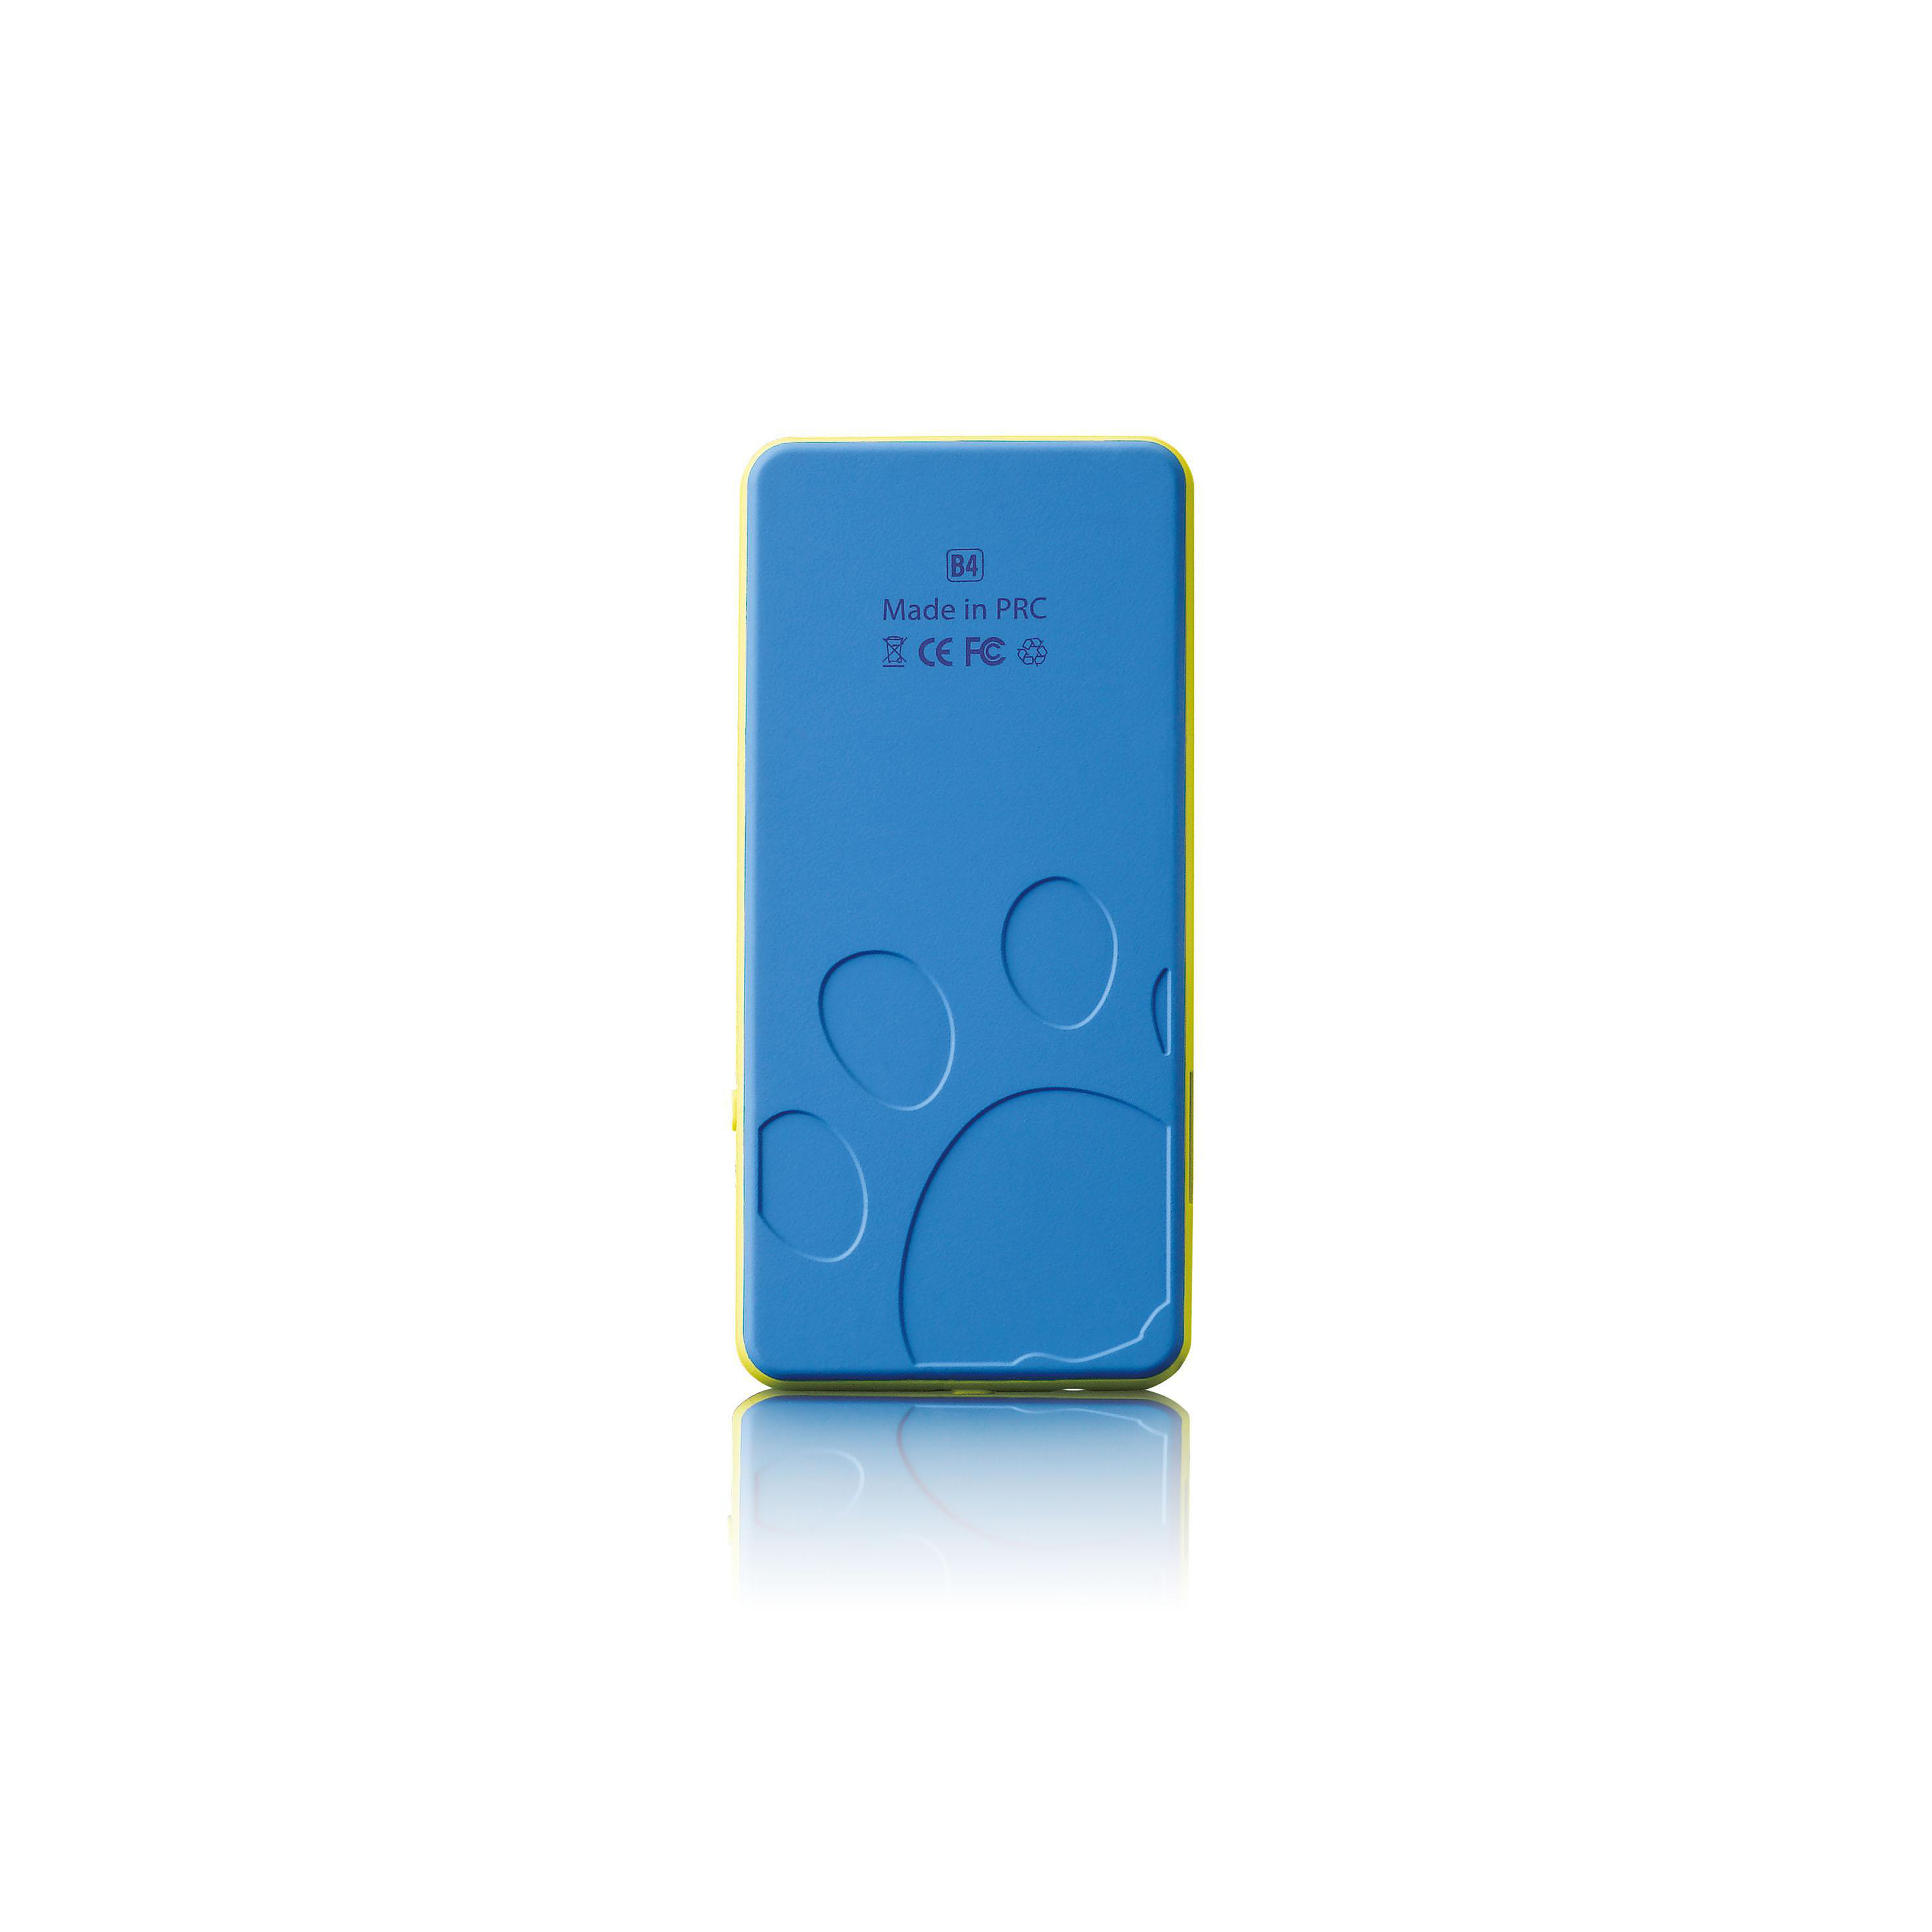 Xemio-560 GB, 8 Player Blau MP3 LENCO